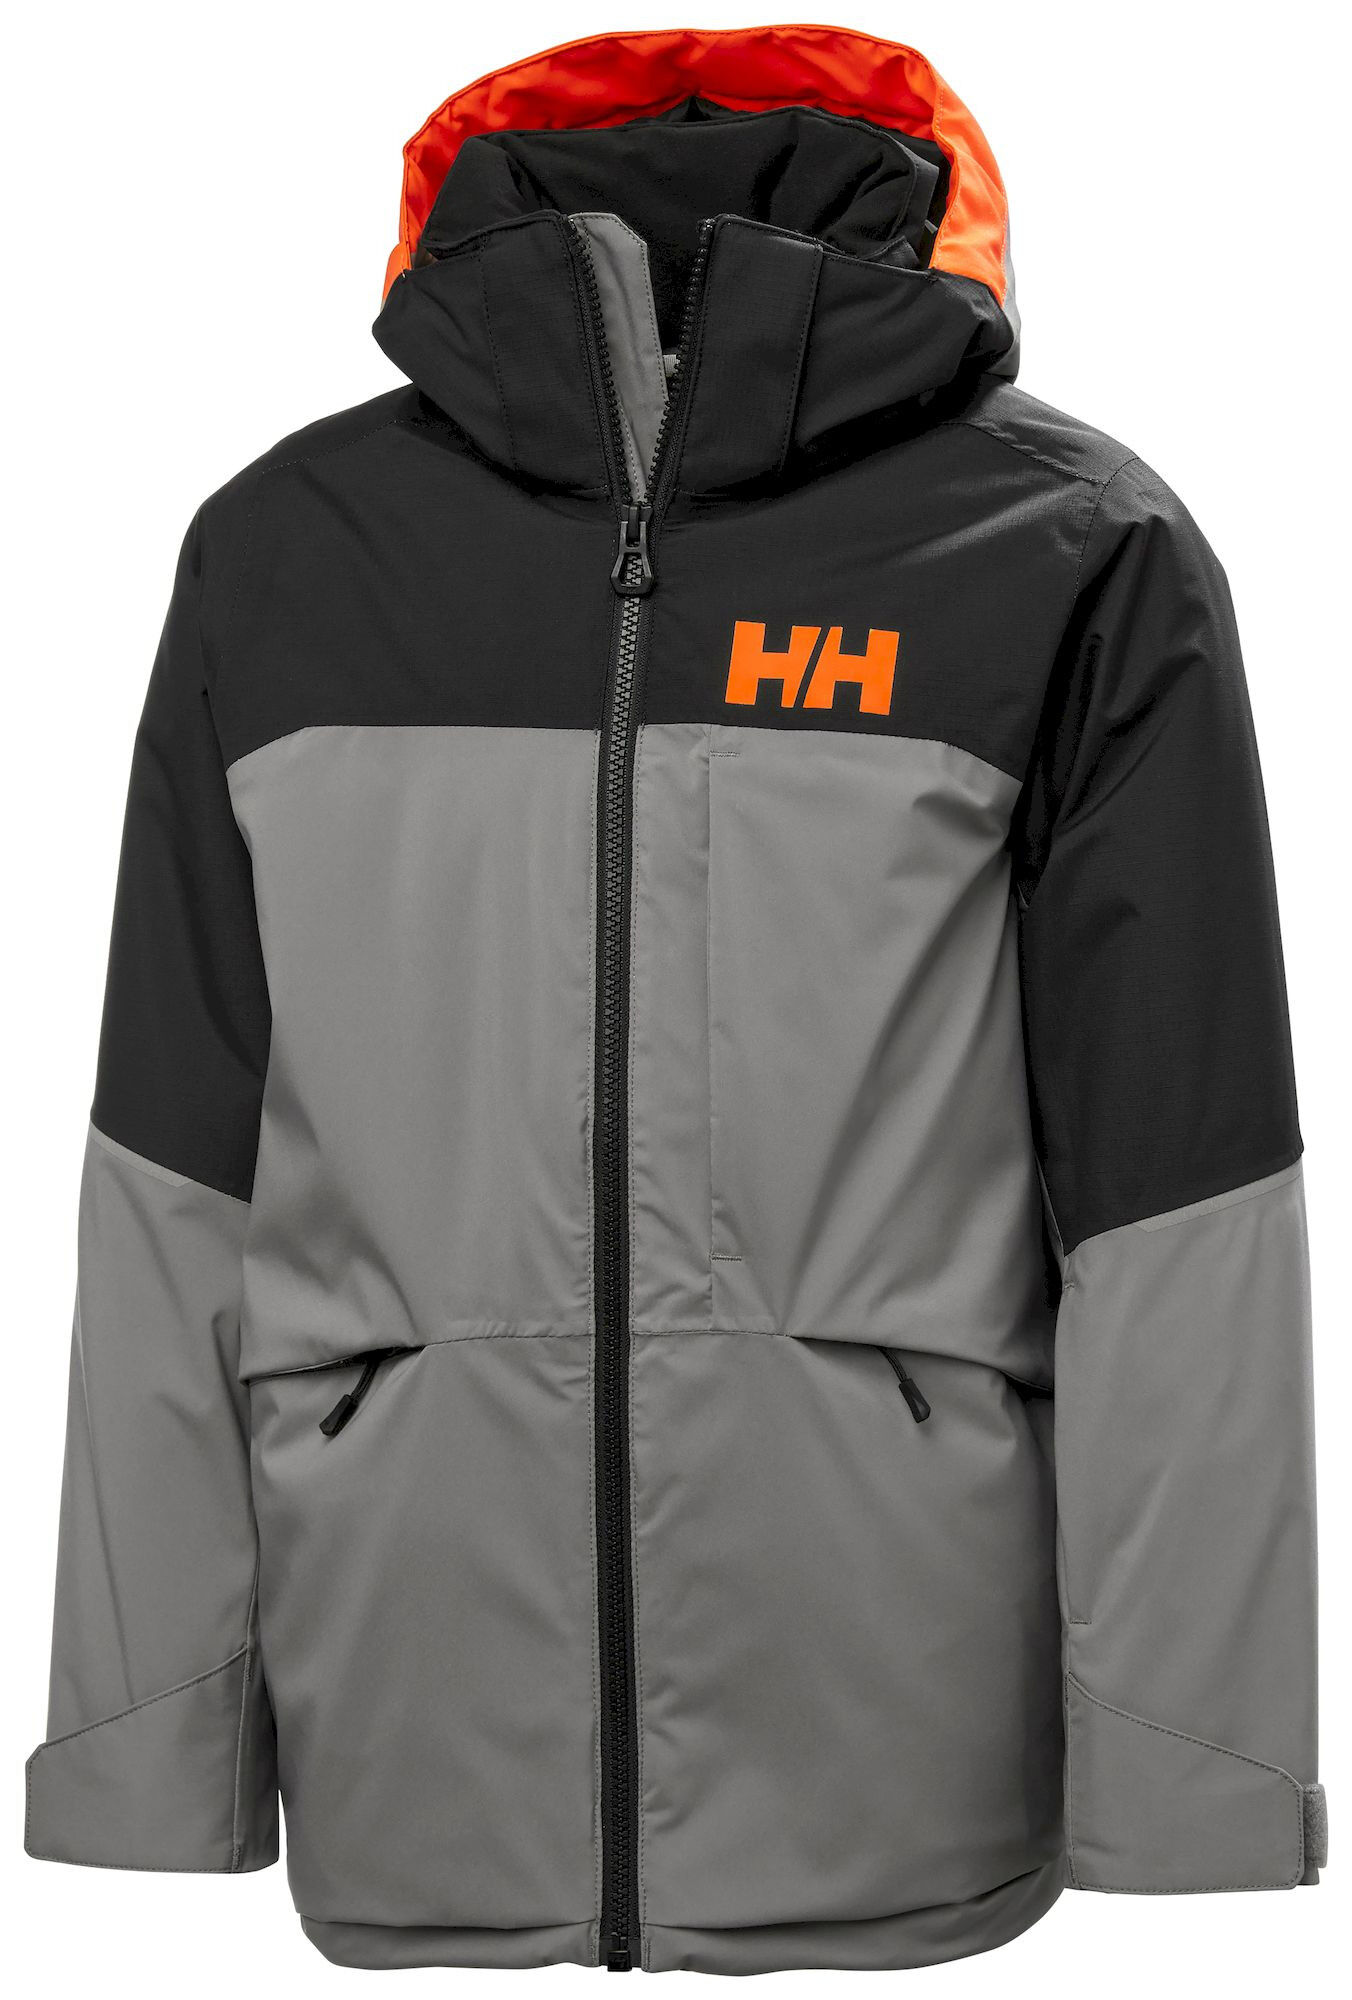 Helly Hansen Jr Summit Jacket - Skijacke - Kind | Hardloop